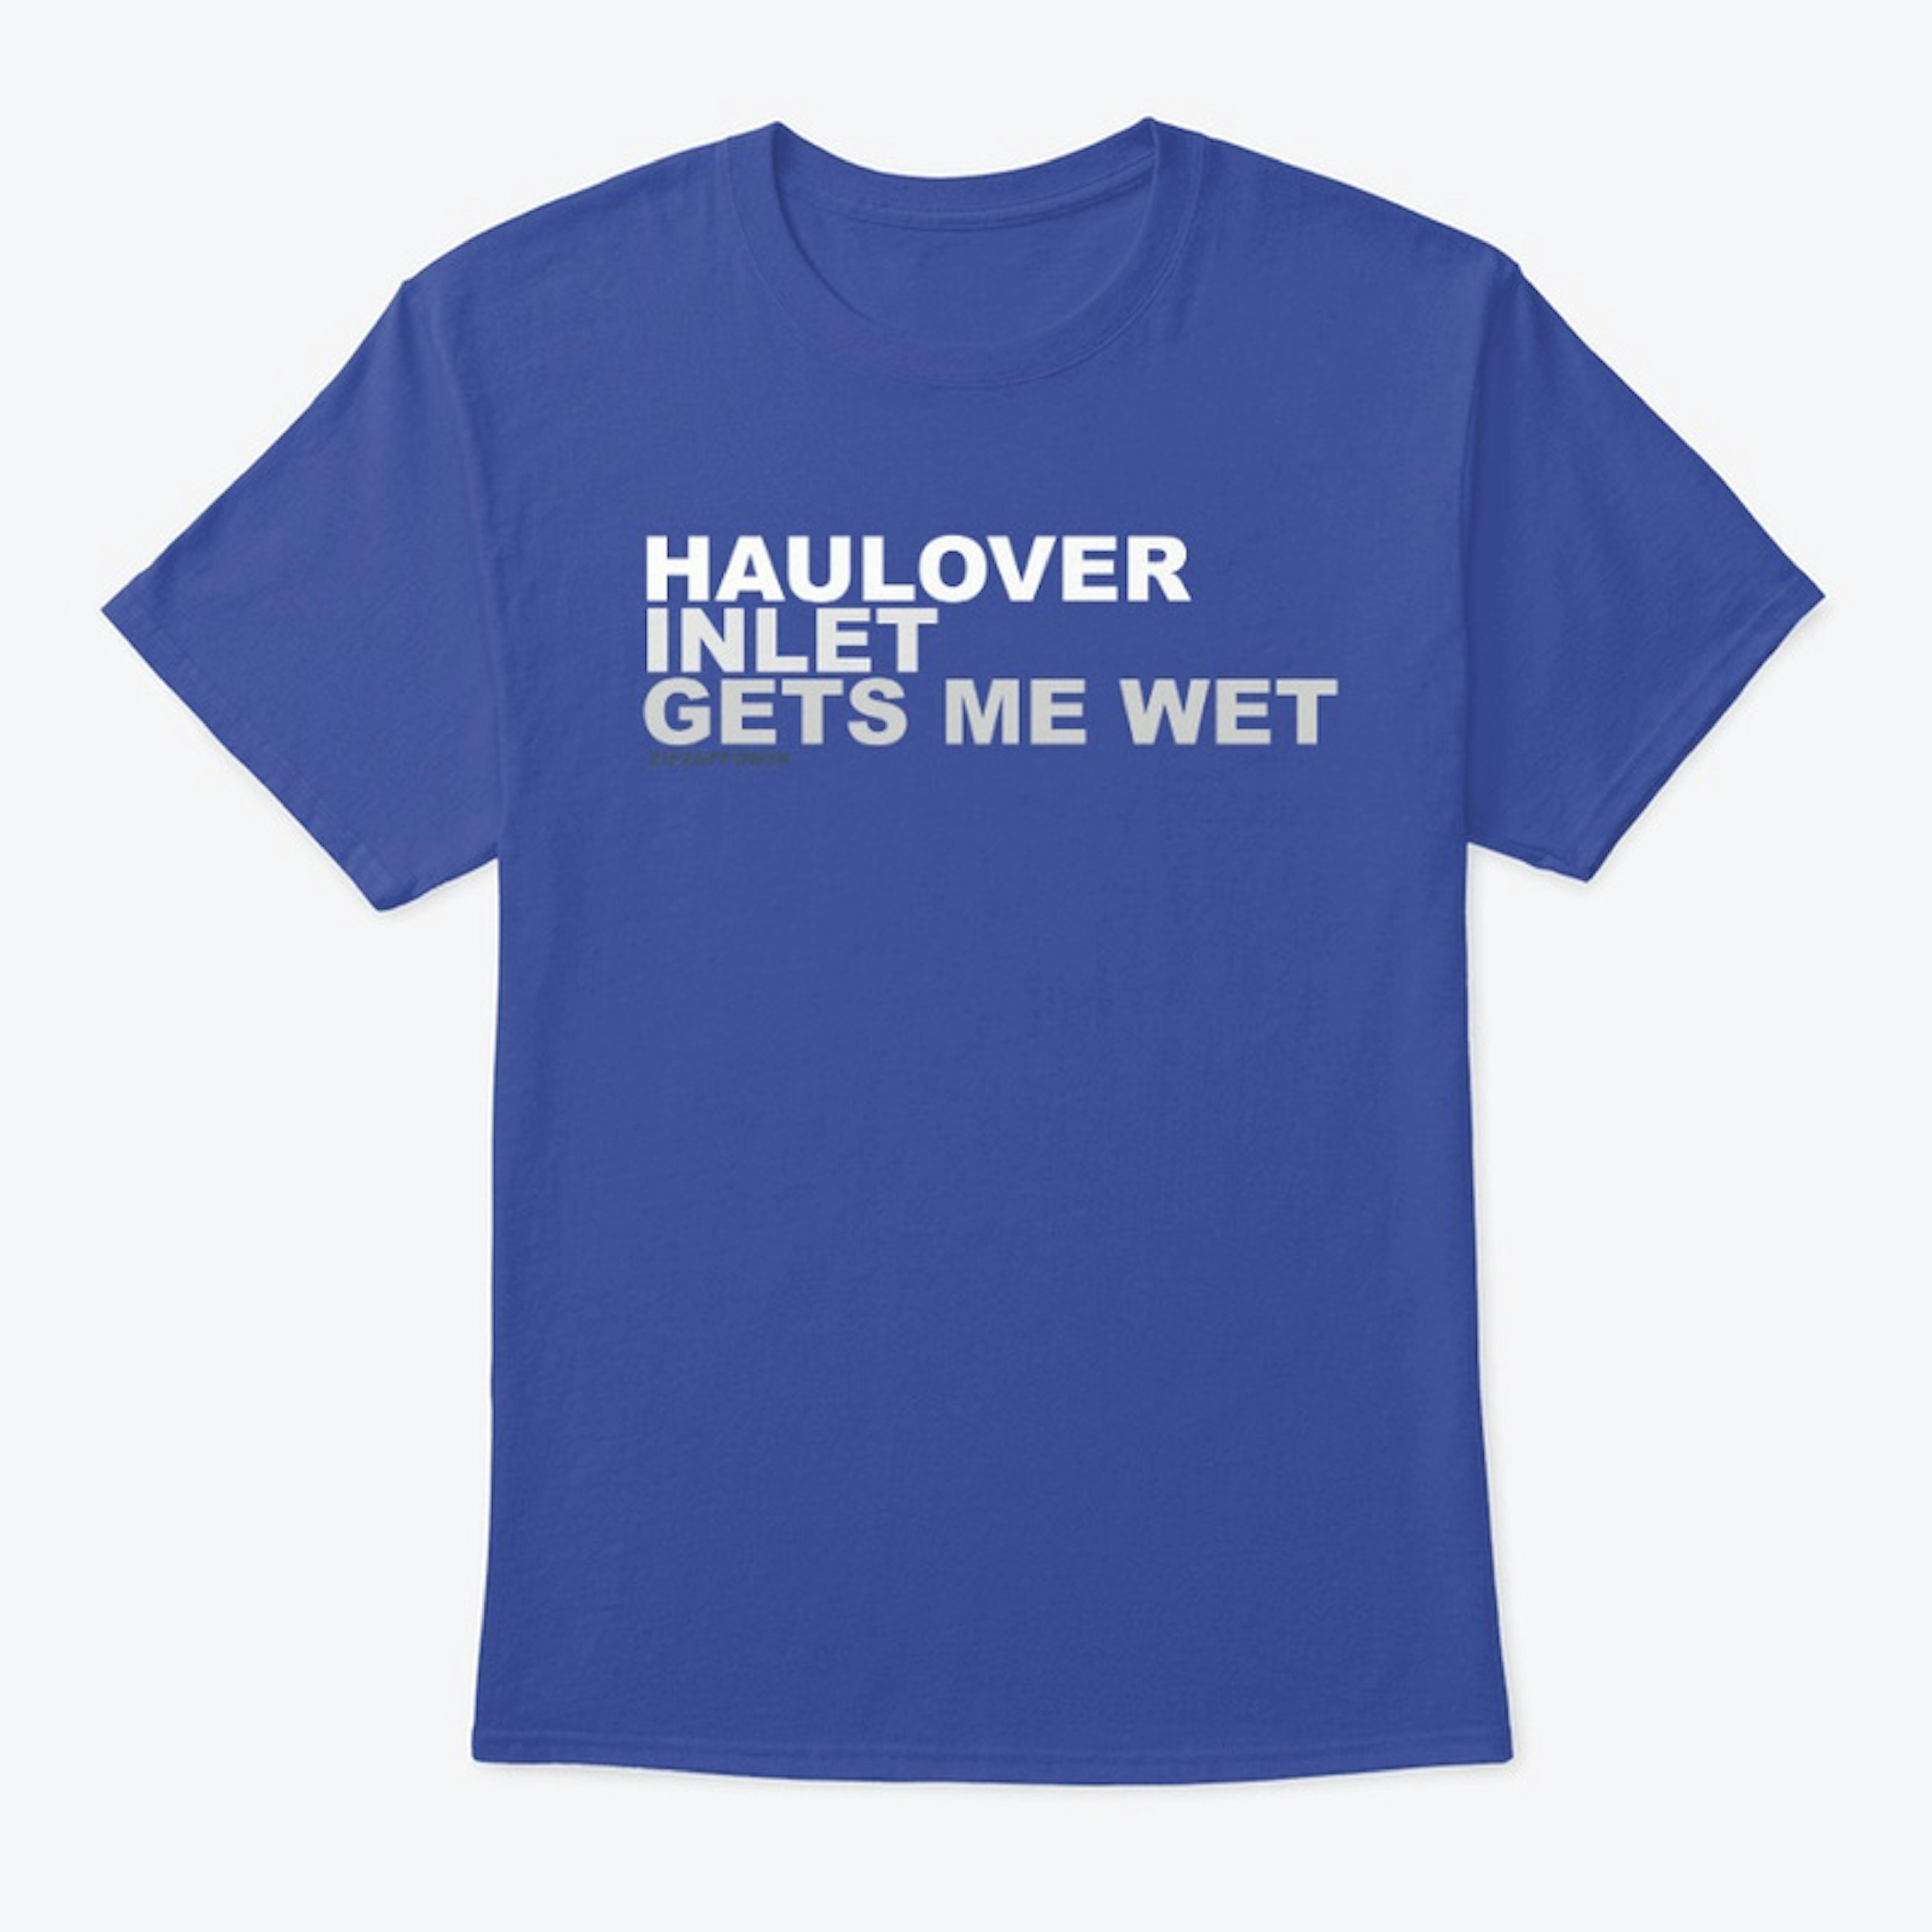 Haulover Inlet Gets Me Wet